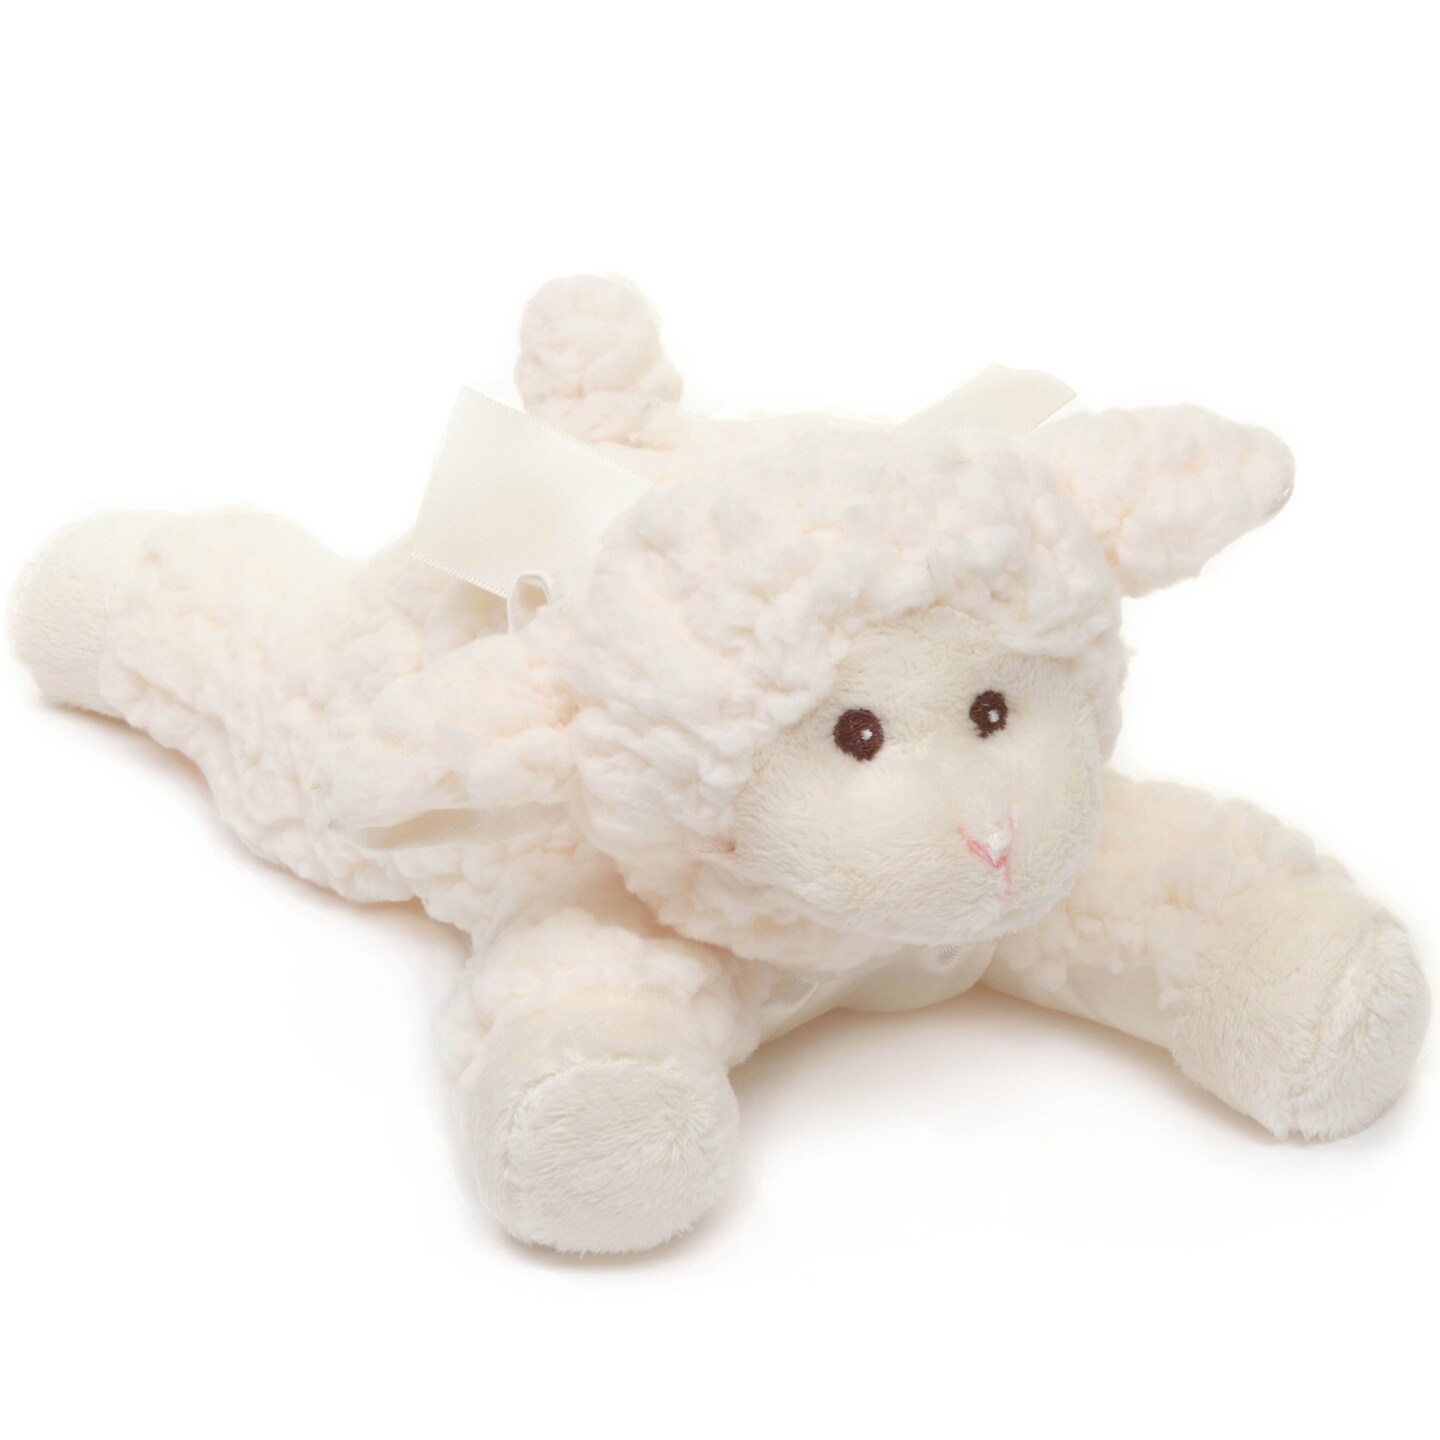 Bearington Baby Baa Plush Stuffed Animal Lamb with Rattle, 8 inches